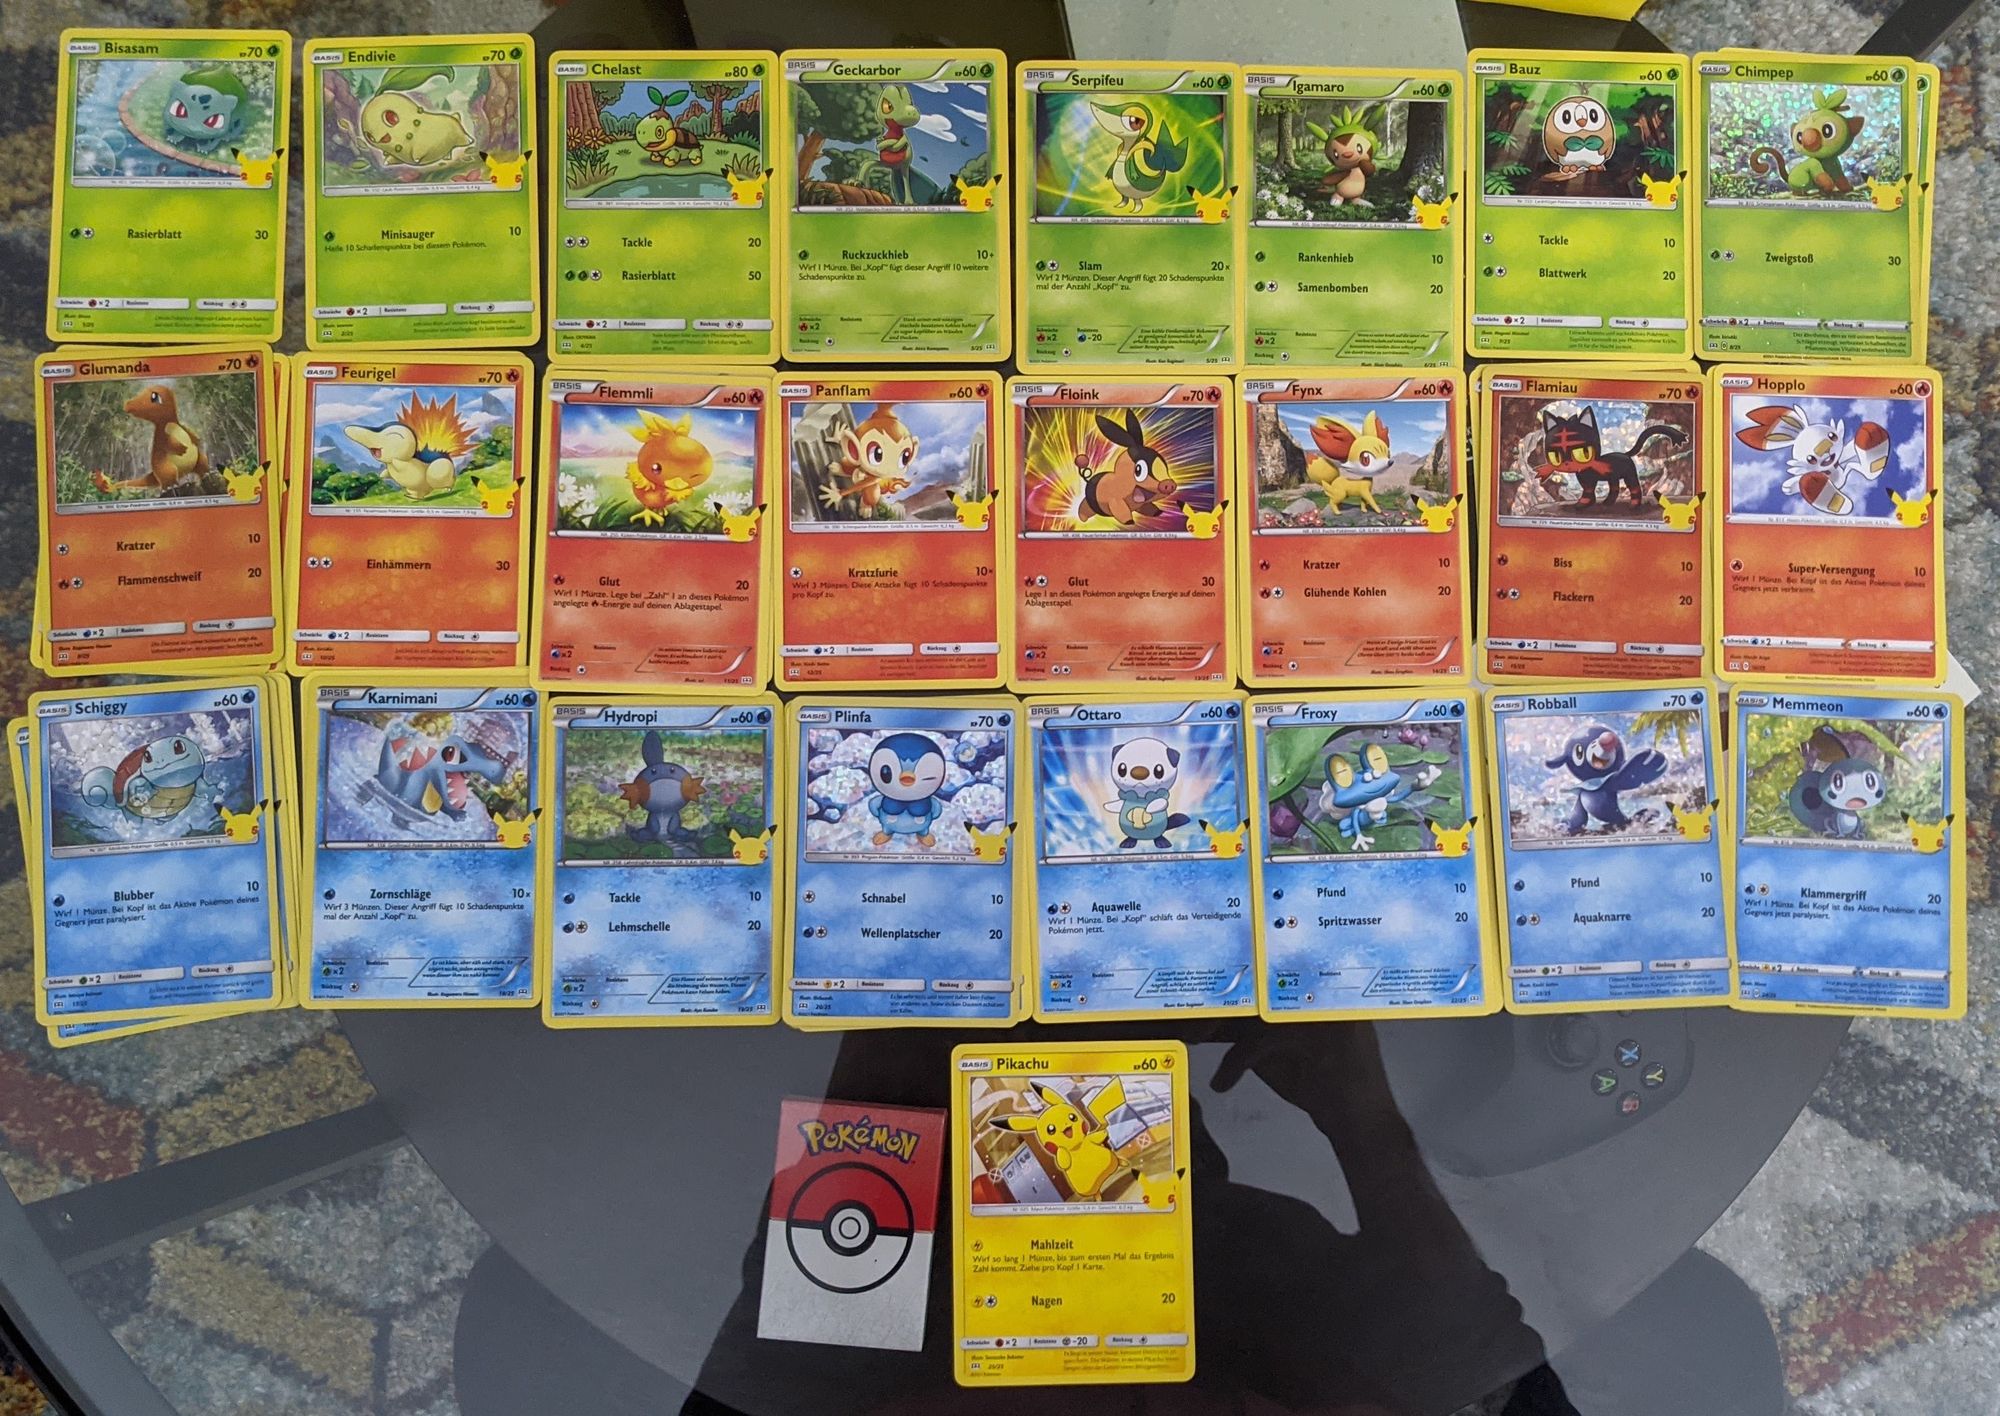 The 25 McDonald's Pokémon cards.